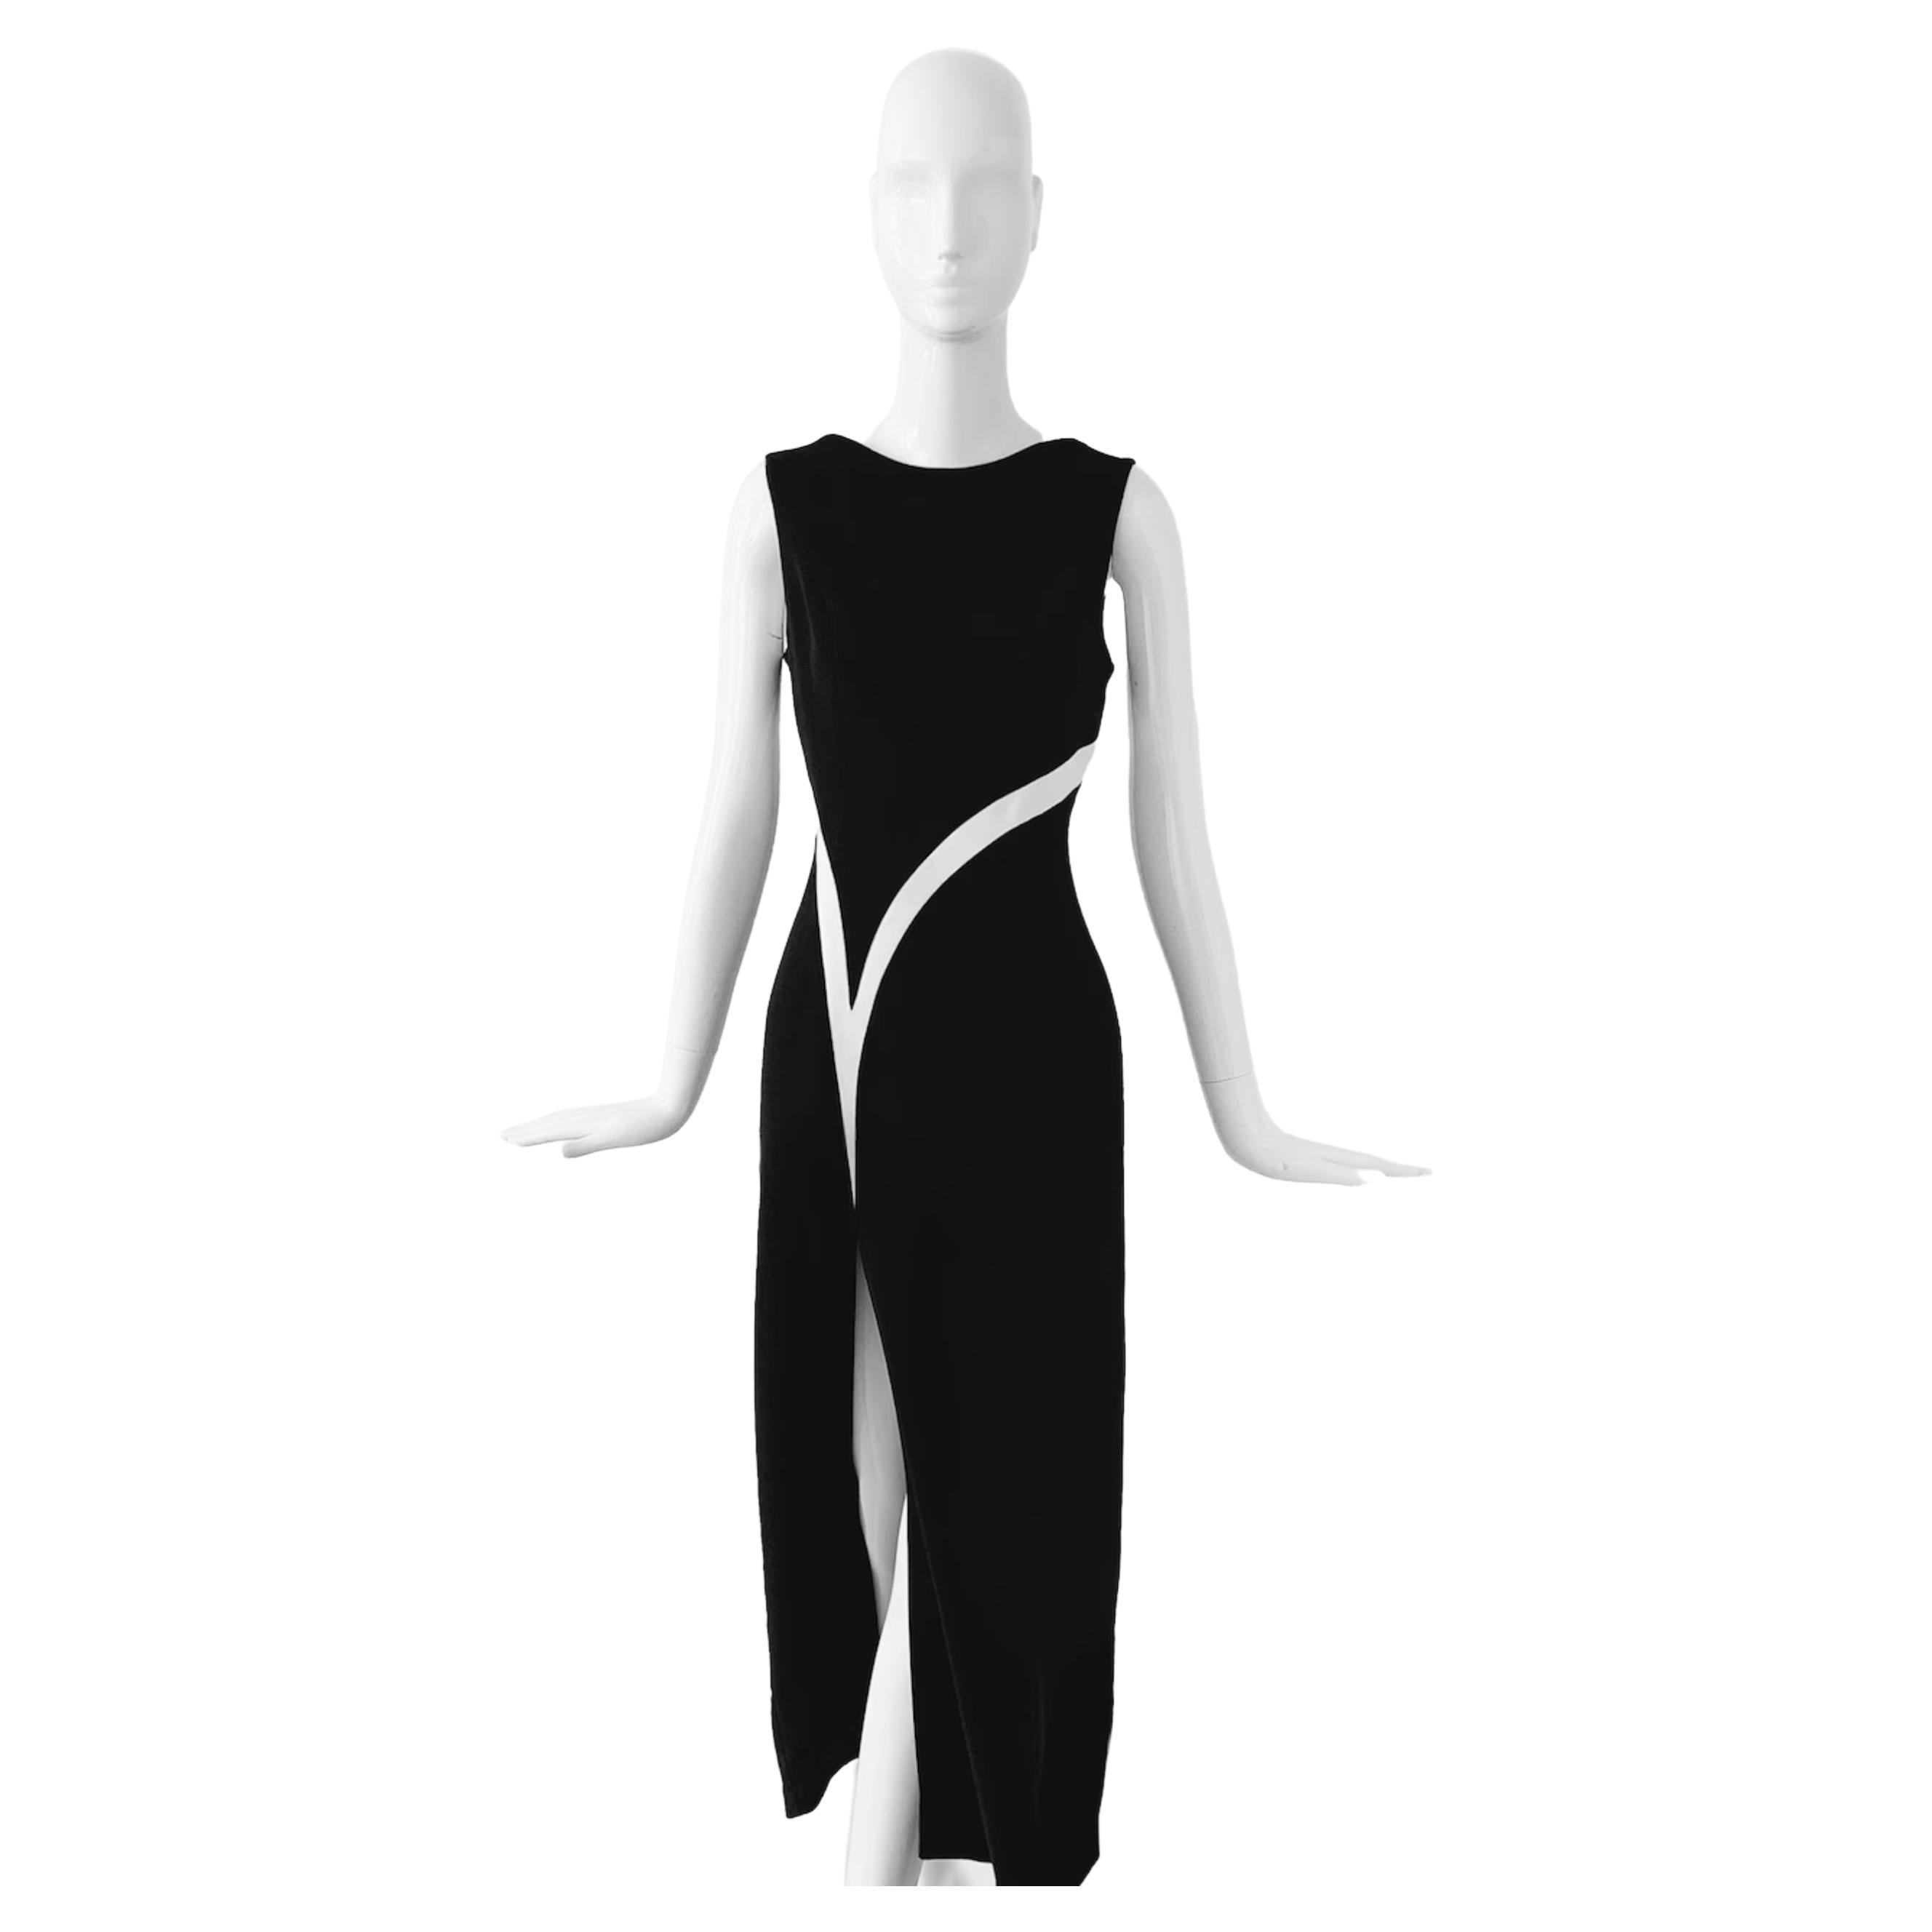 Thierry Mugler SS 1999 Evening Dress Vintage Designer Black White Avant Garde